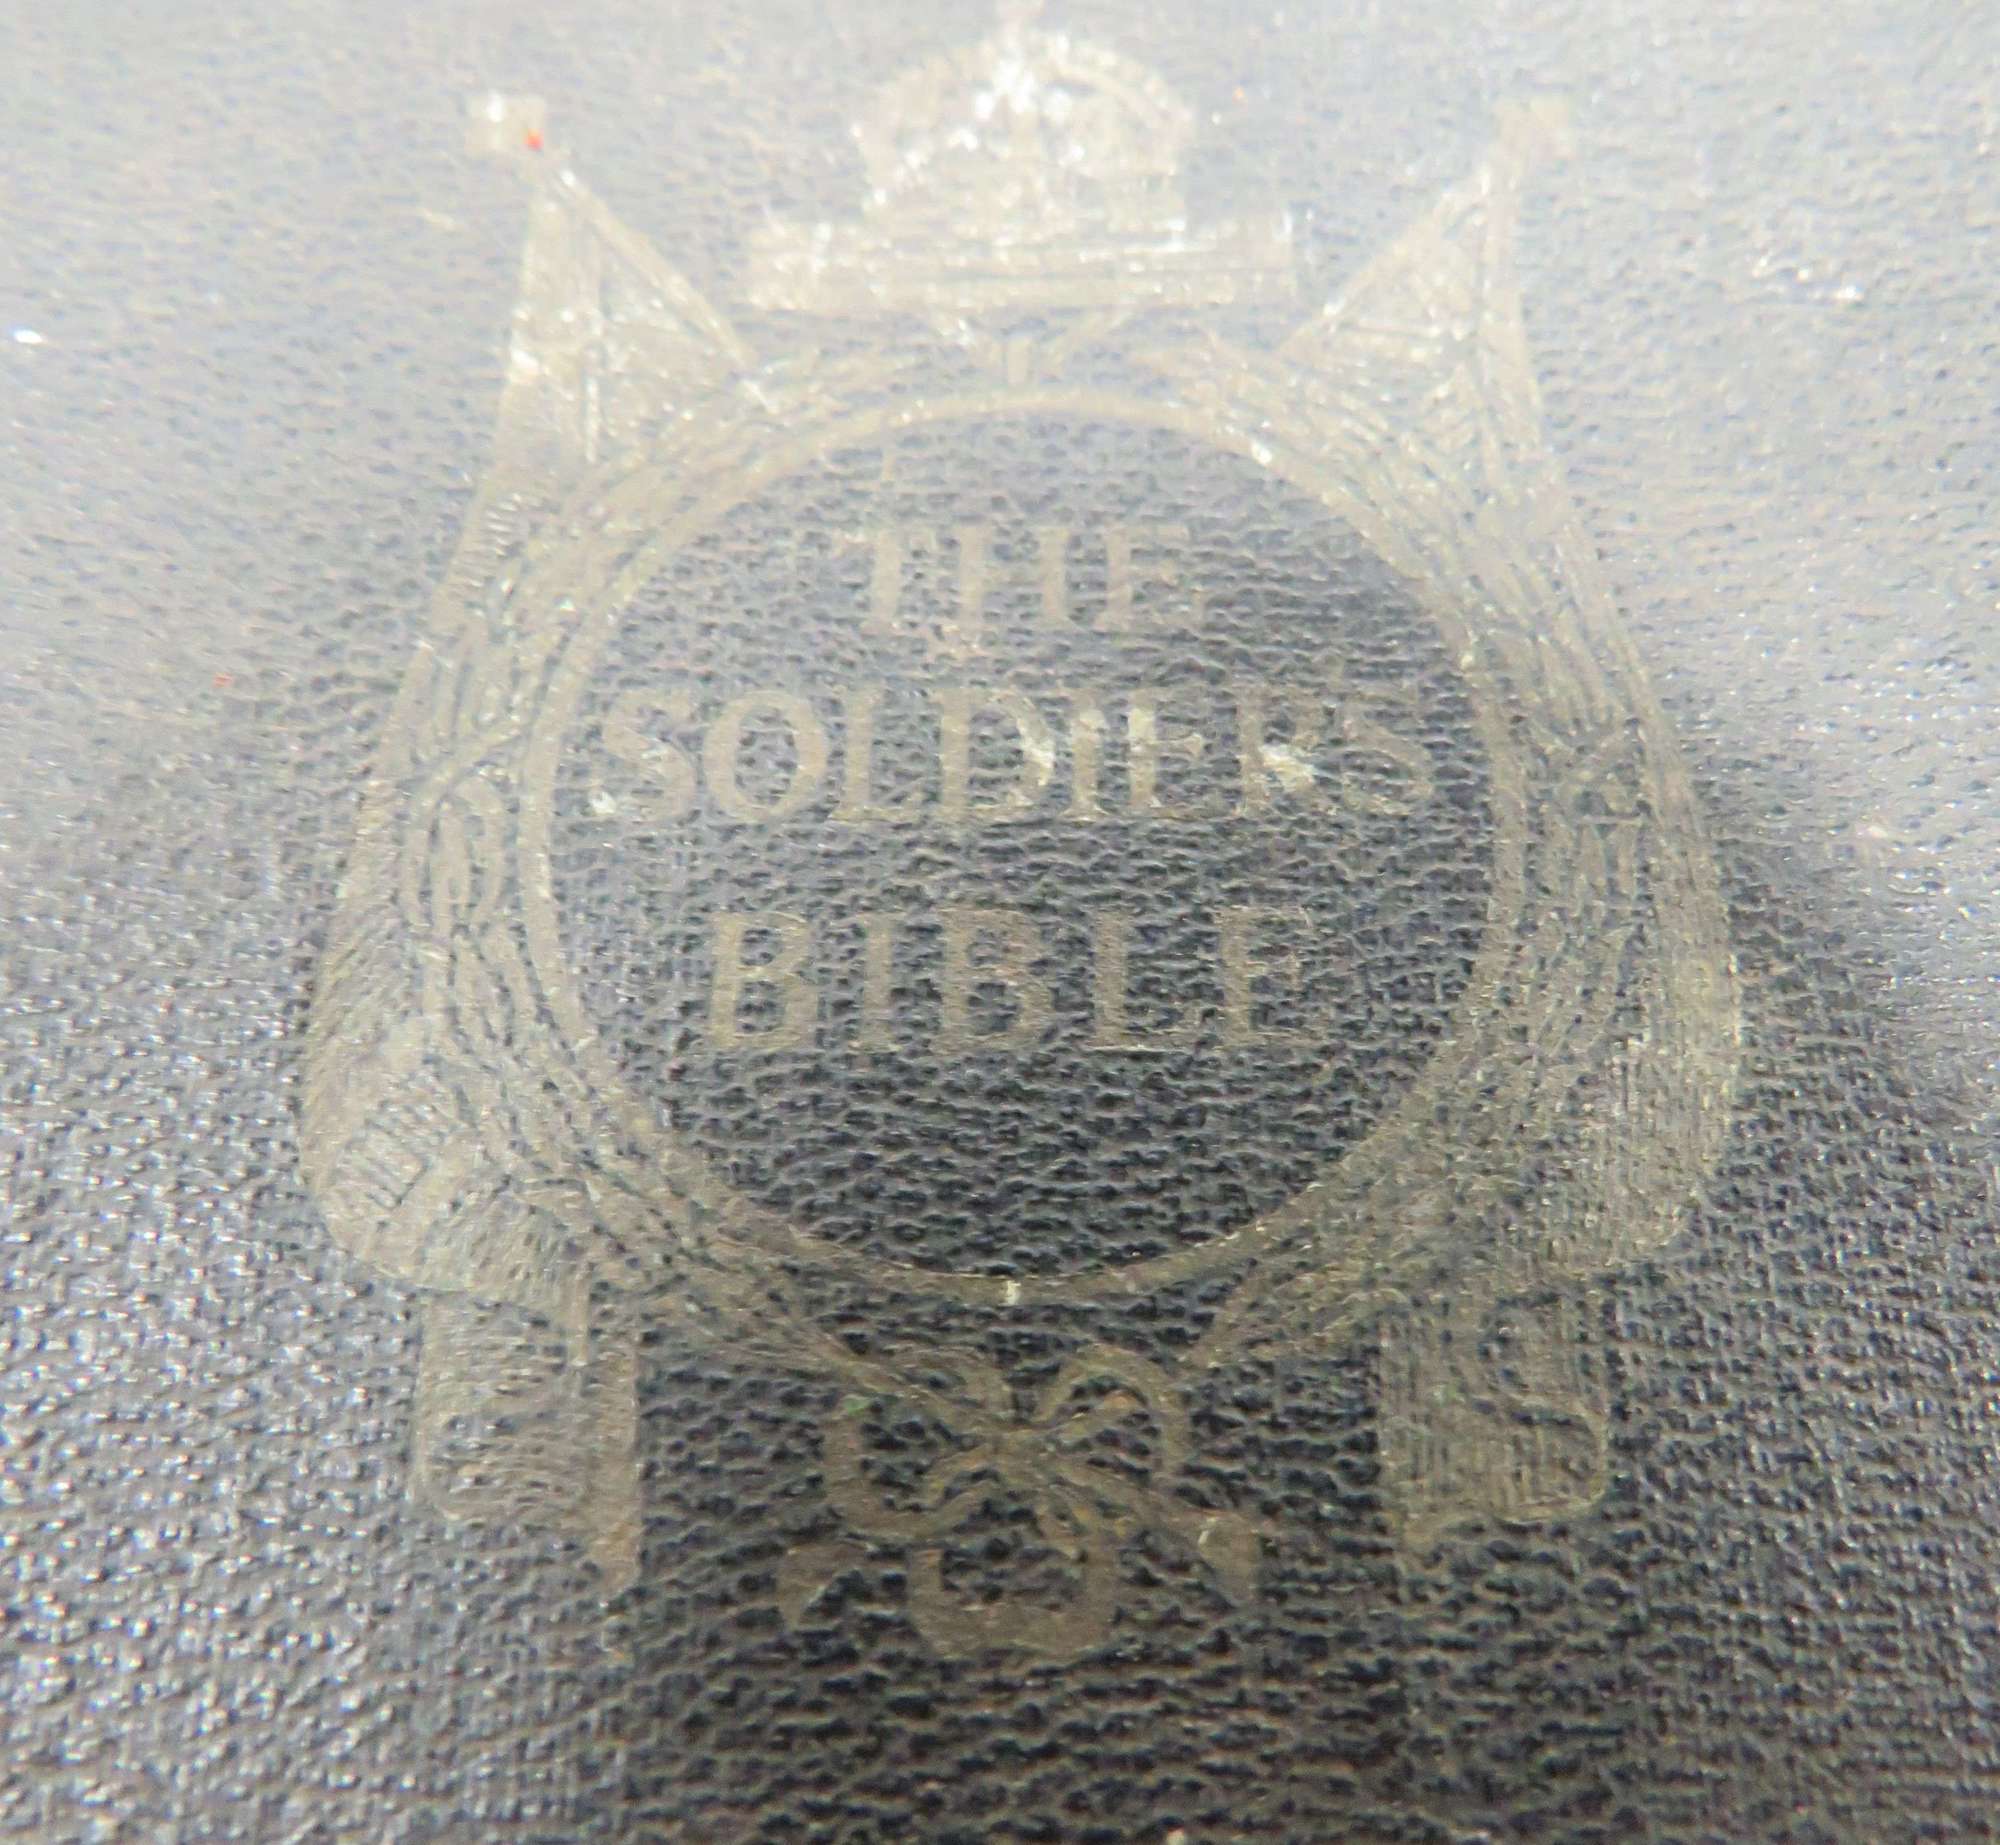 Interwar Coldstream Guards Bible